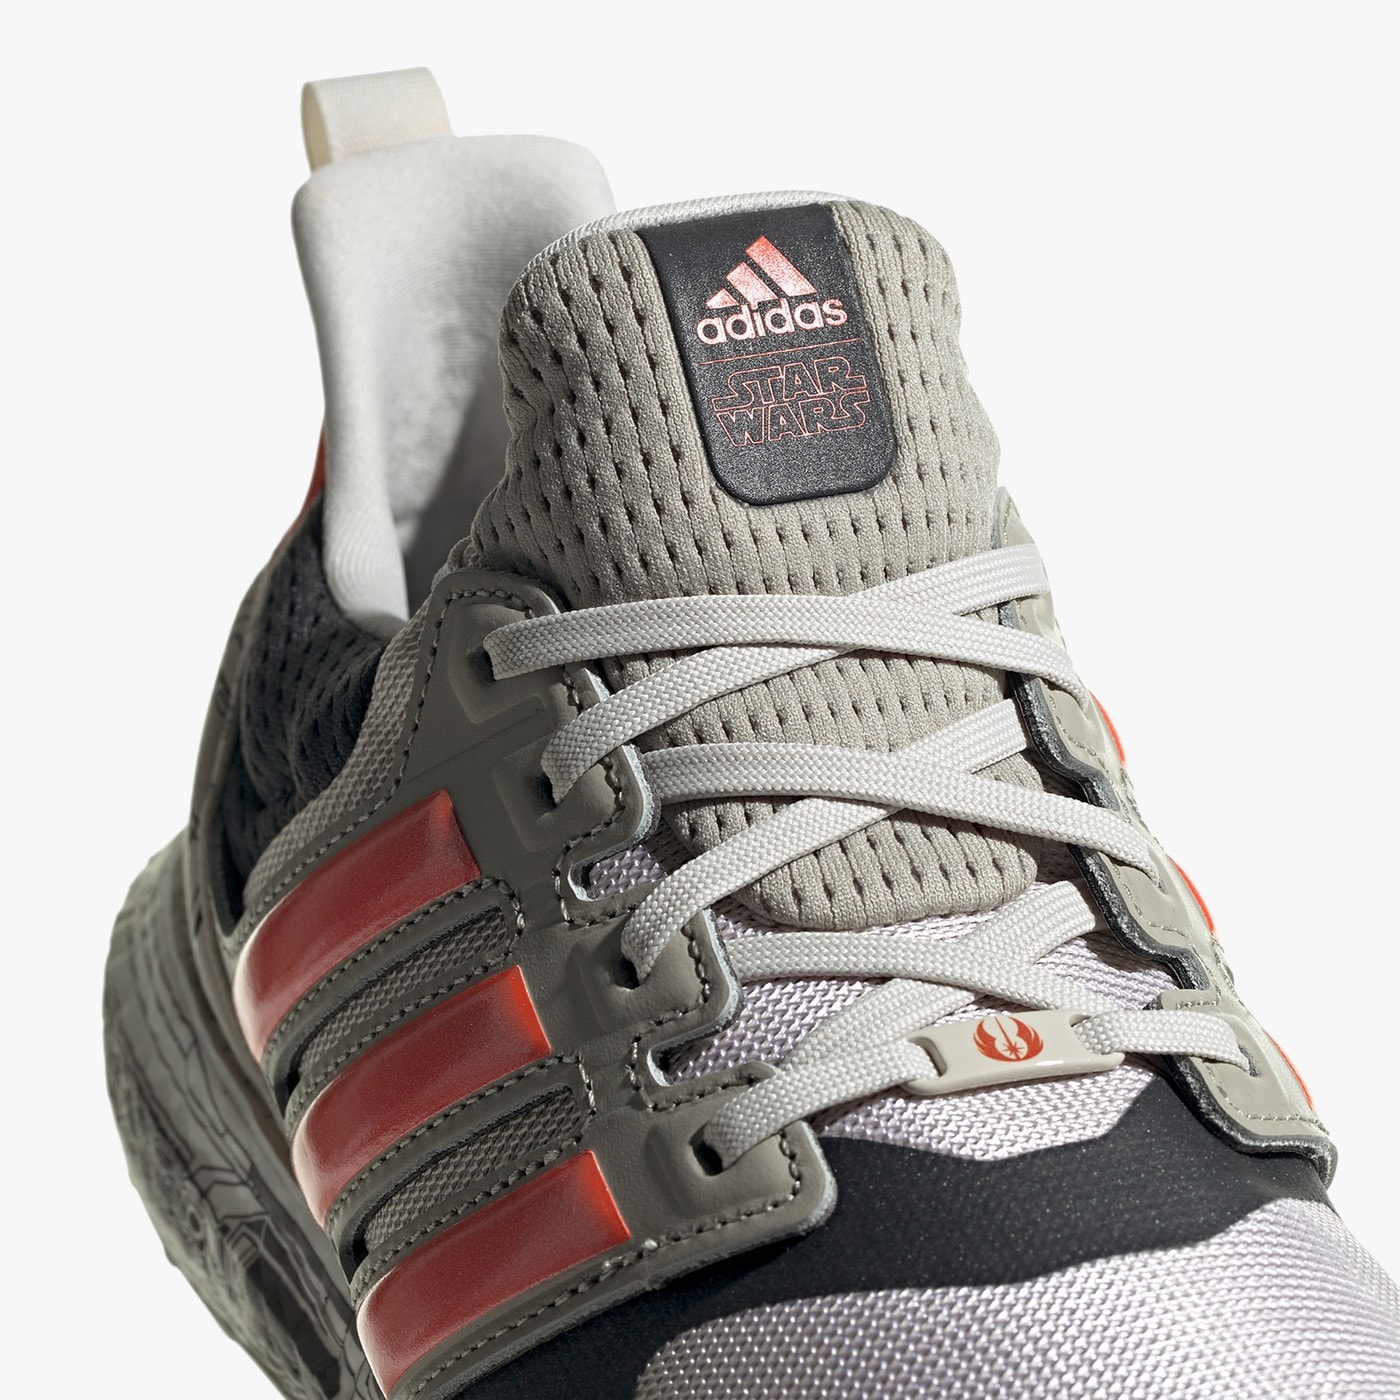 adidas x《Star Wars》X-Wing 戰鬥機聯乘 UltraBOOST 鞋款官方正式相片